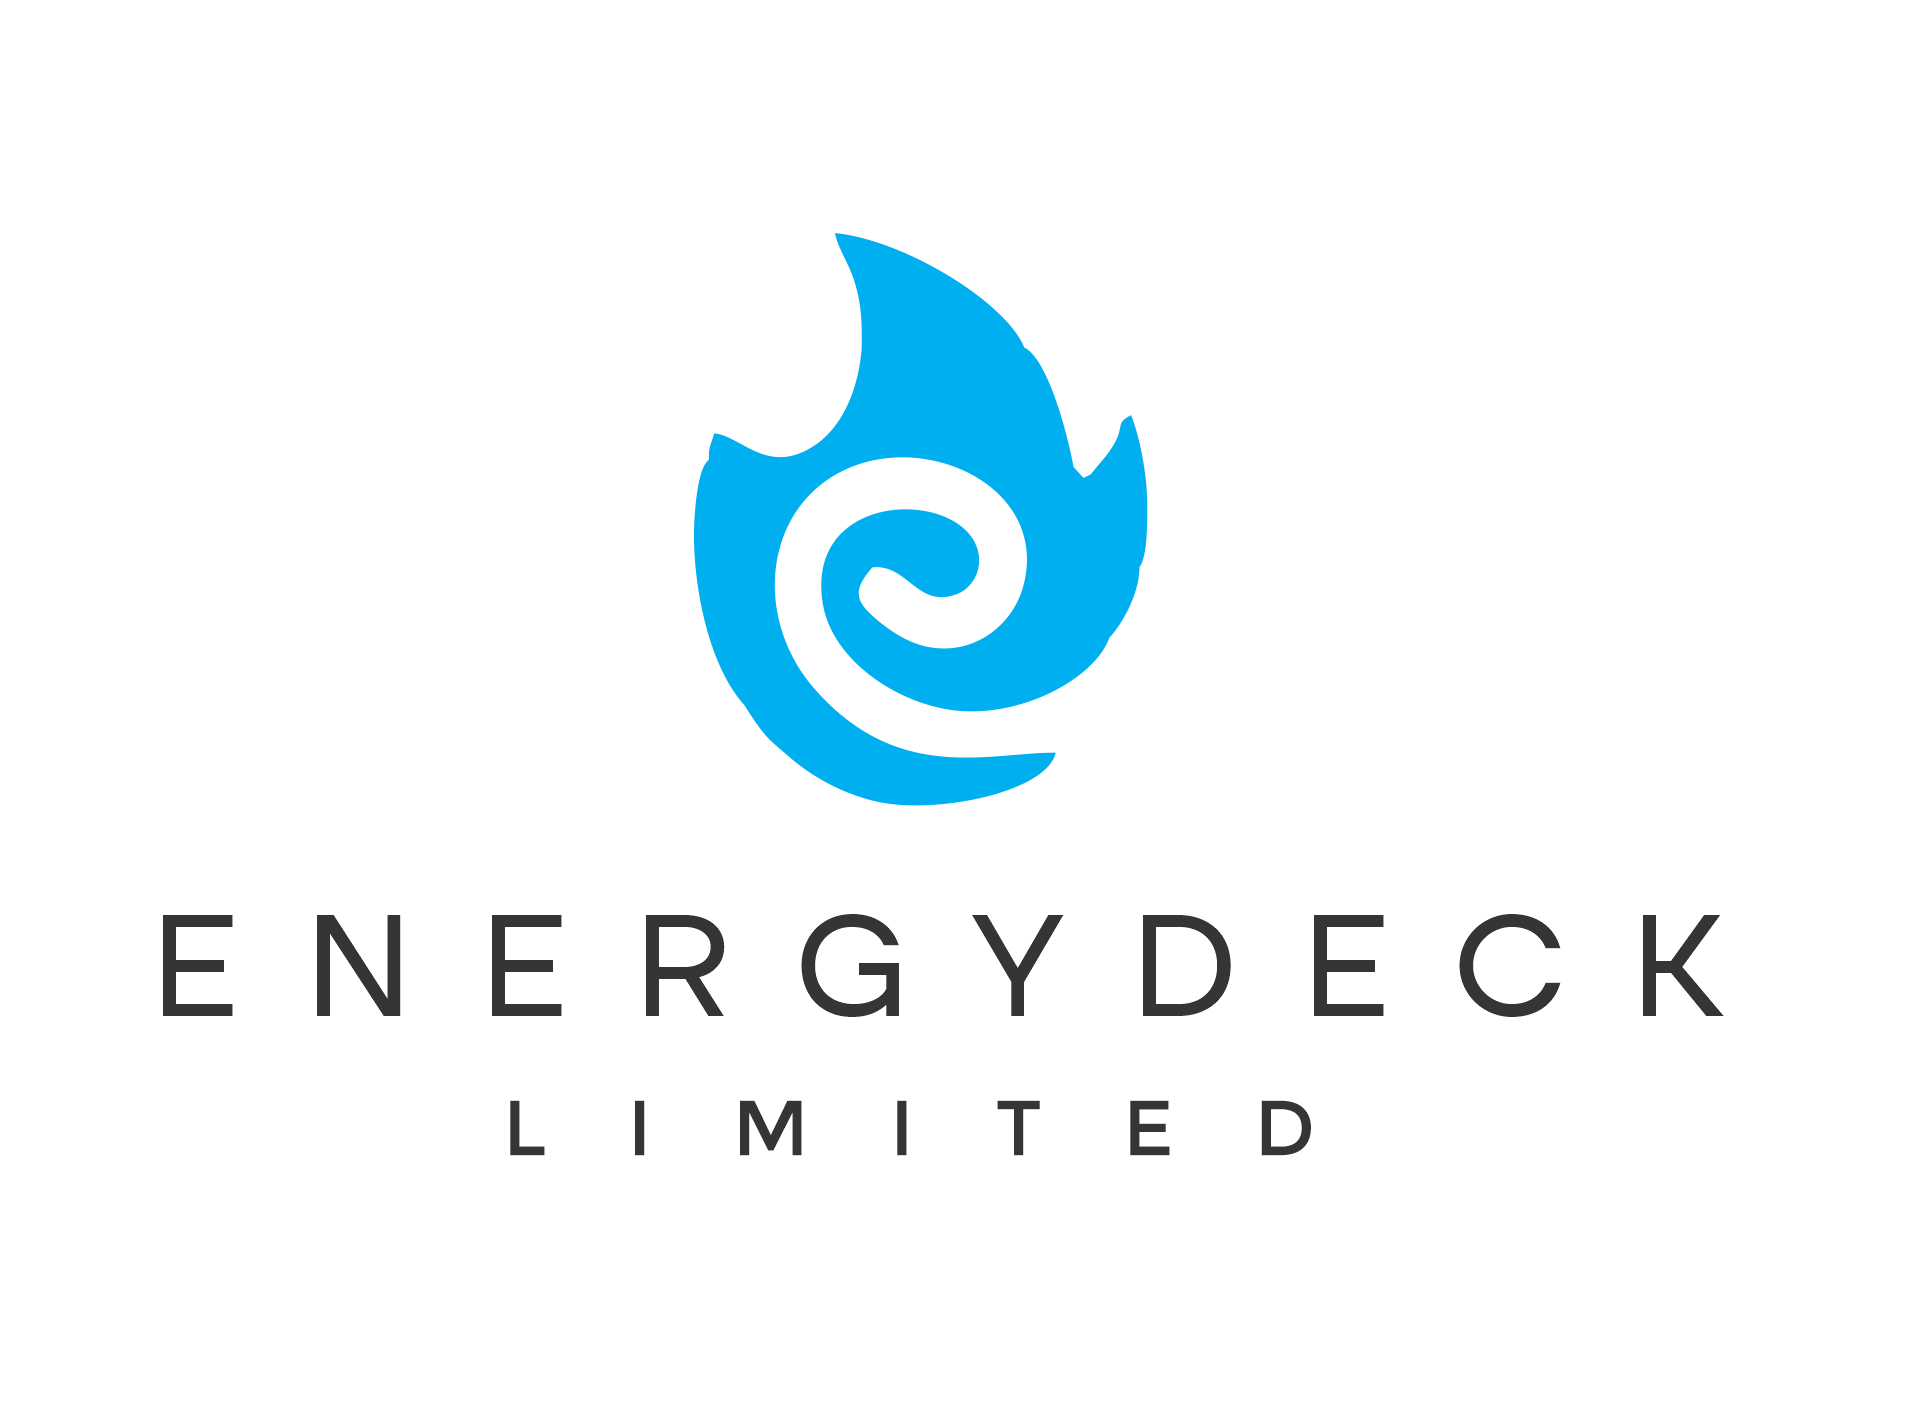 Energydeck Limited